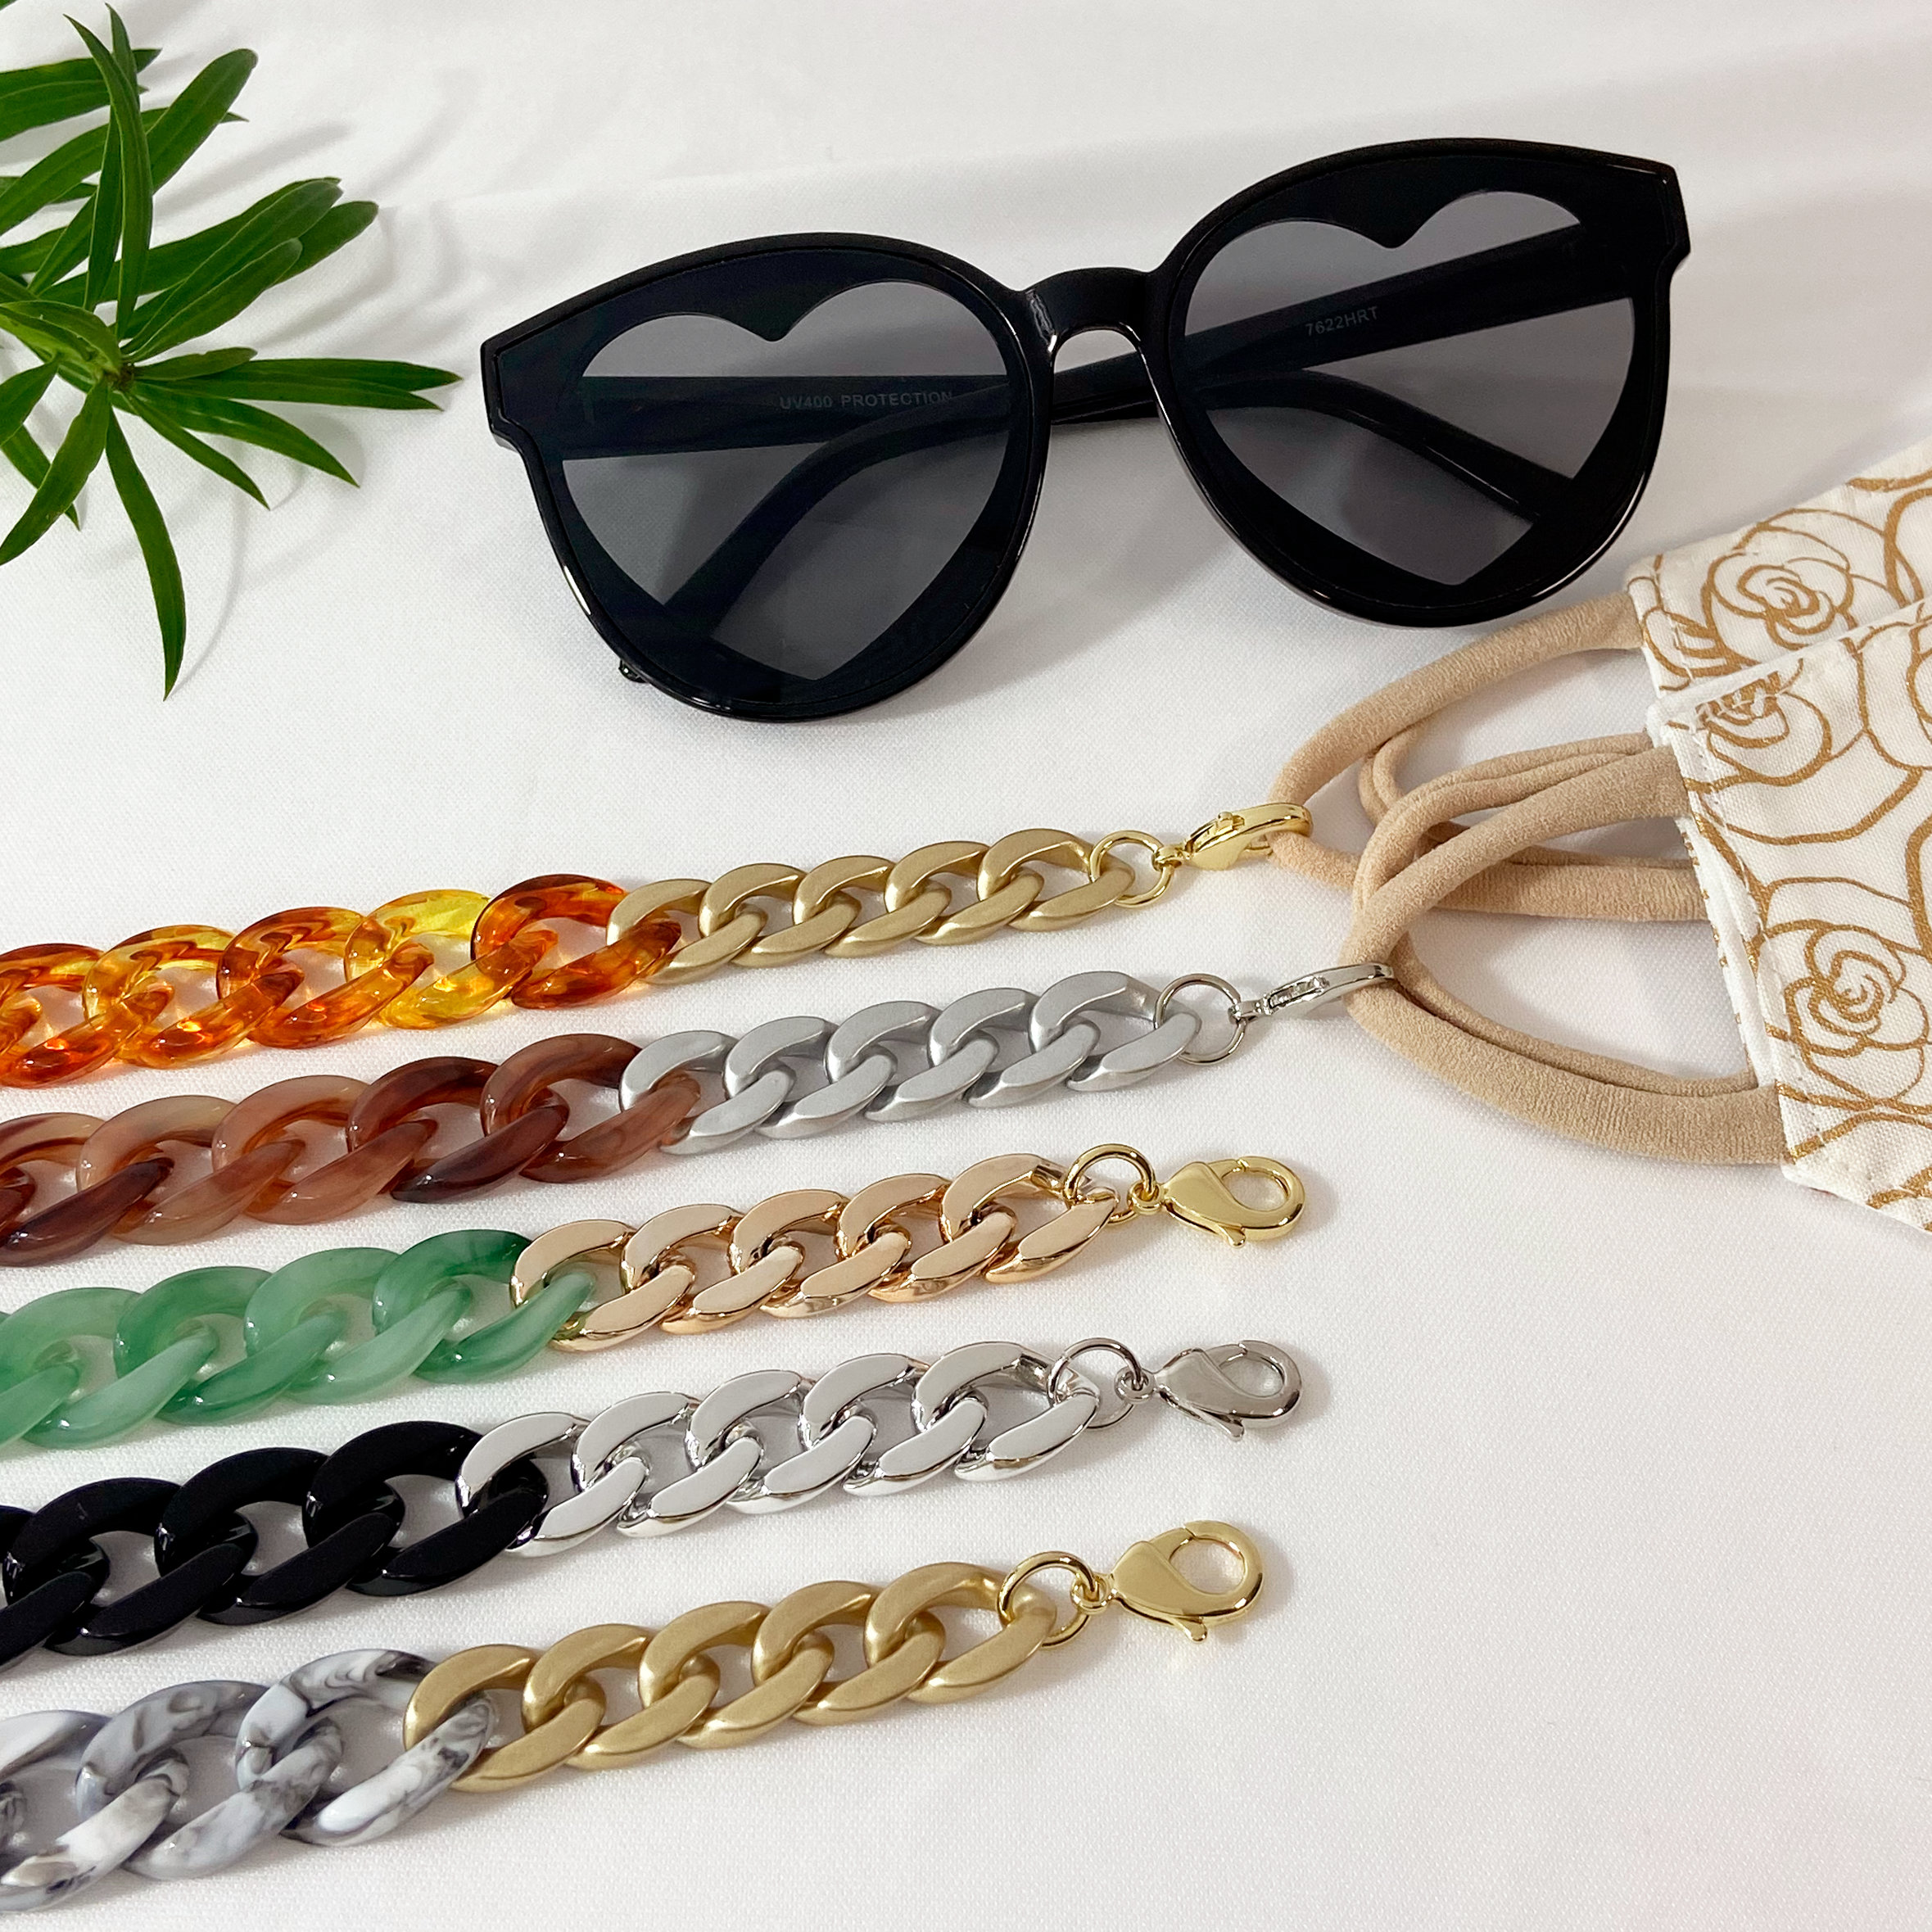 Links- The Chunky Chain 60s Style Sunglasses 5 Colors Tea Tea